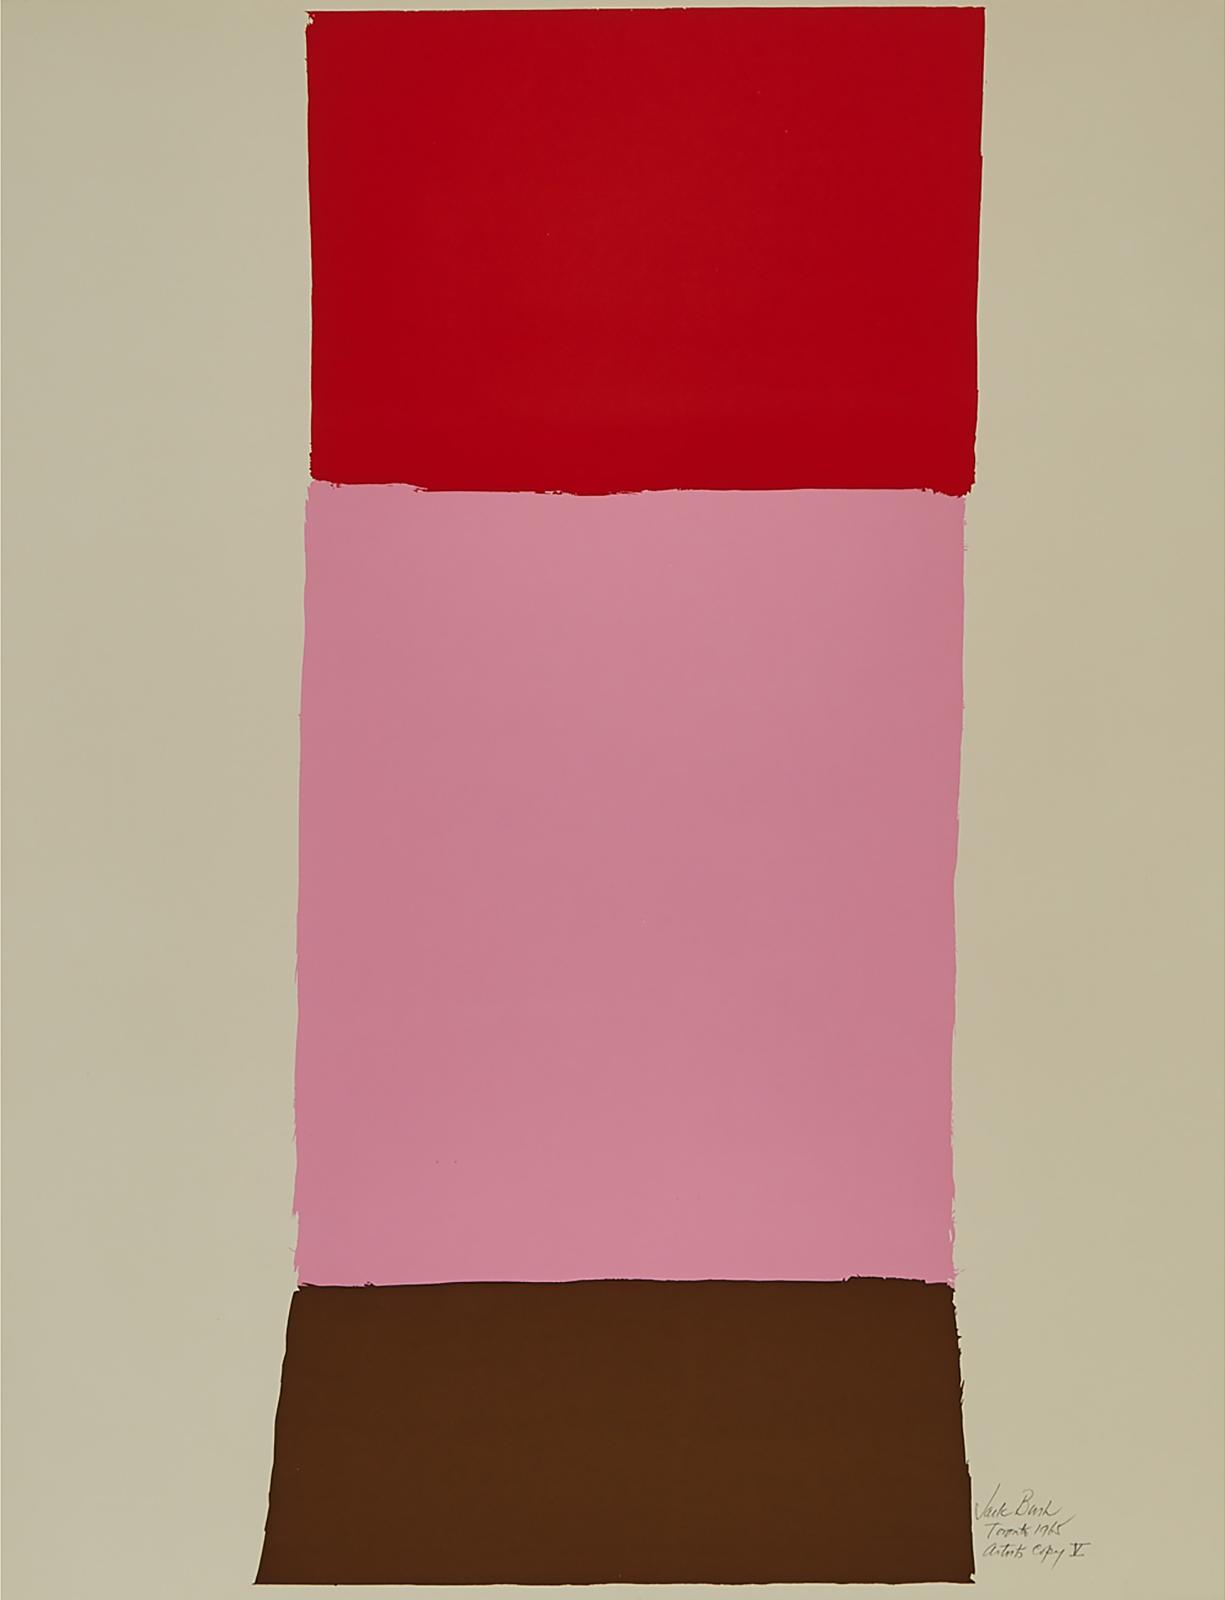 Jack Hamilton Bush (1909-1977) - Orange, Pink, Brown, 1965